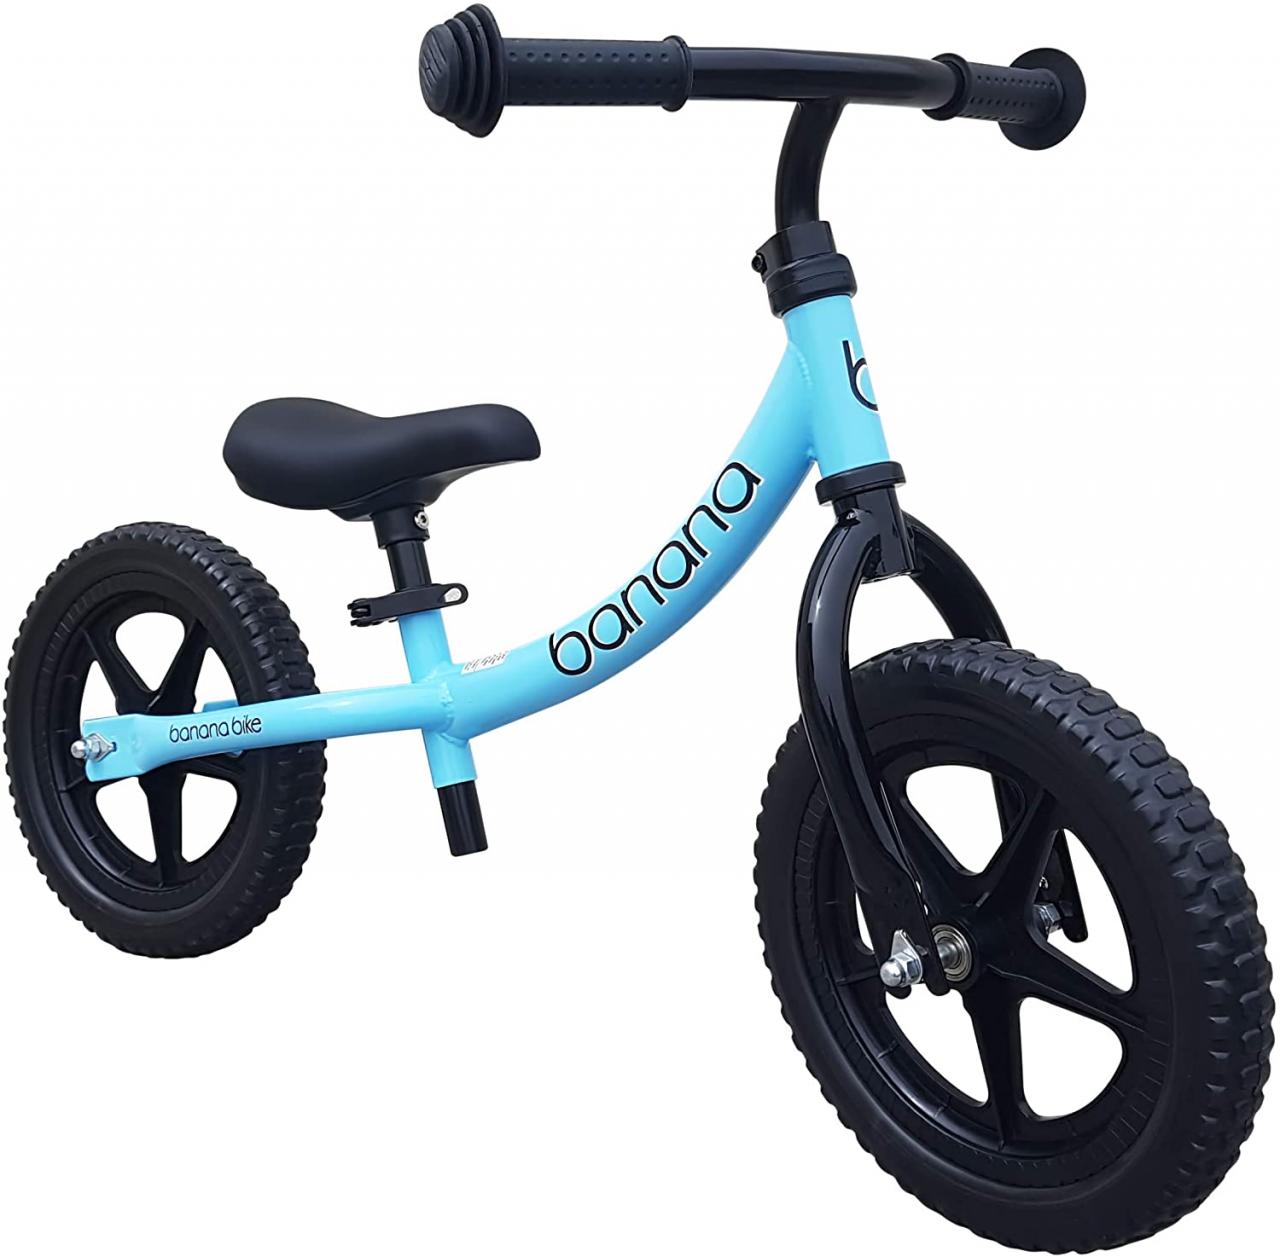 Buy Banana LT Balance Bike - Lightweight for Toddlers, Kids - 2, 3, 4 Year  Olds Online in Hong Kong. B01N5V4SBY